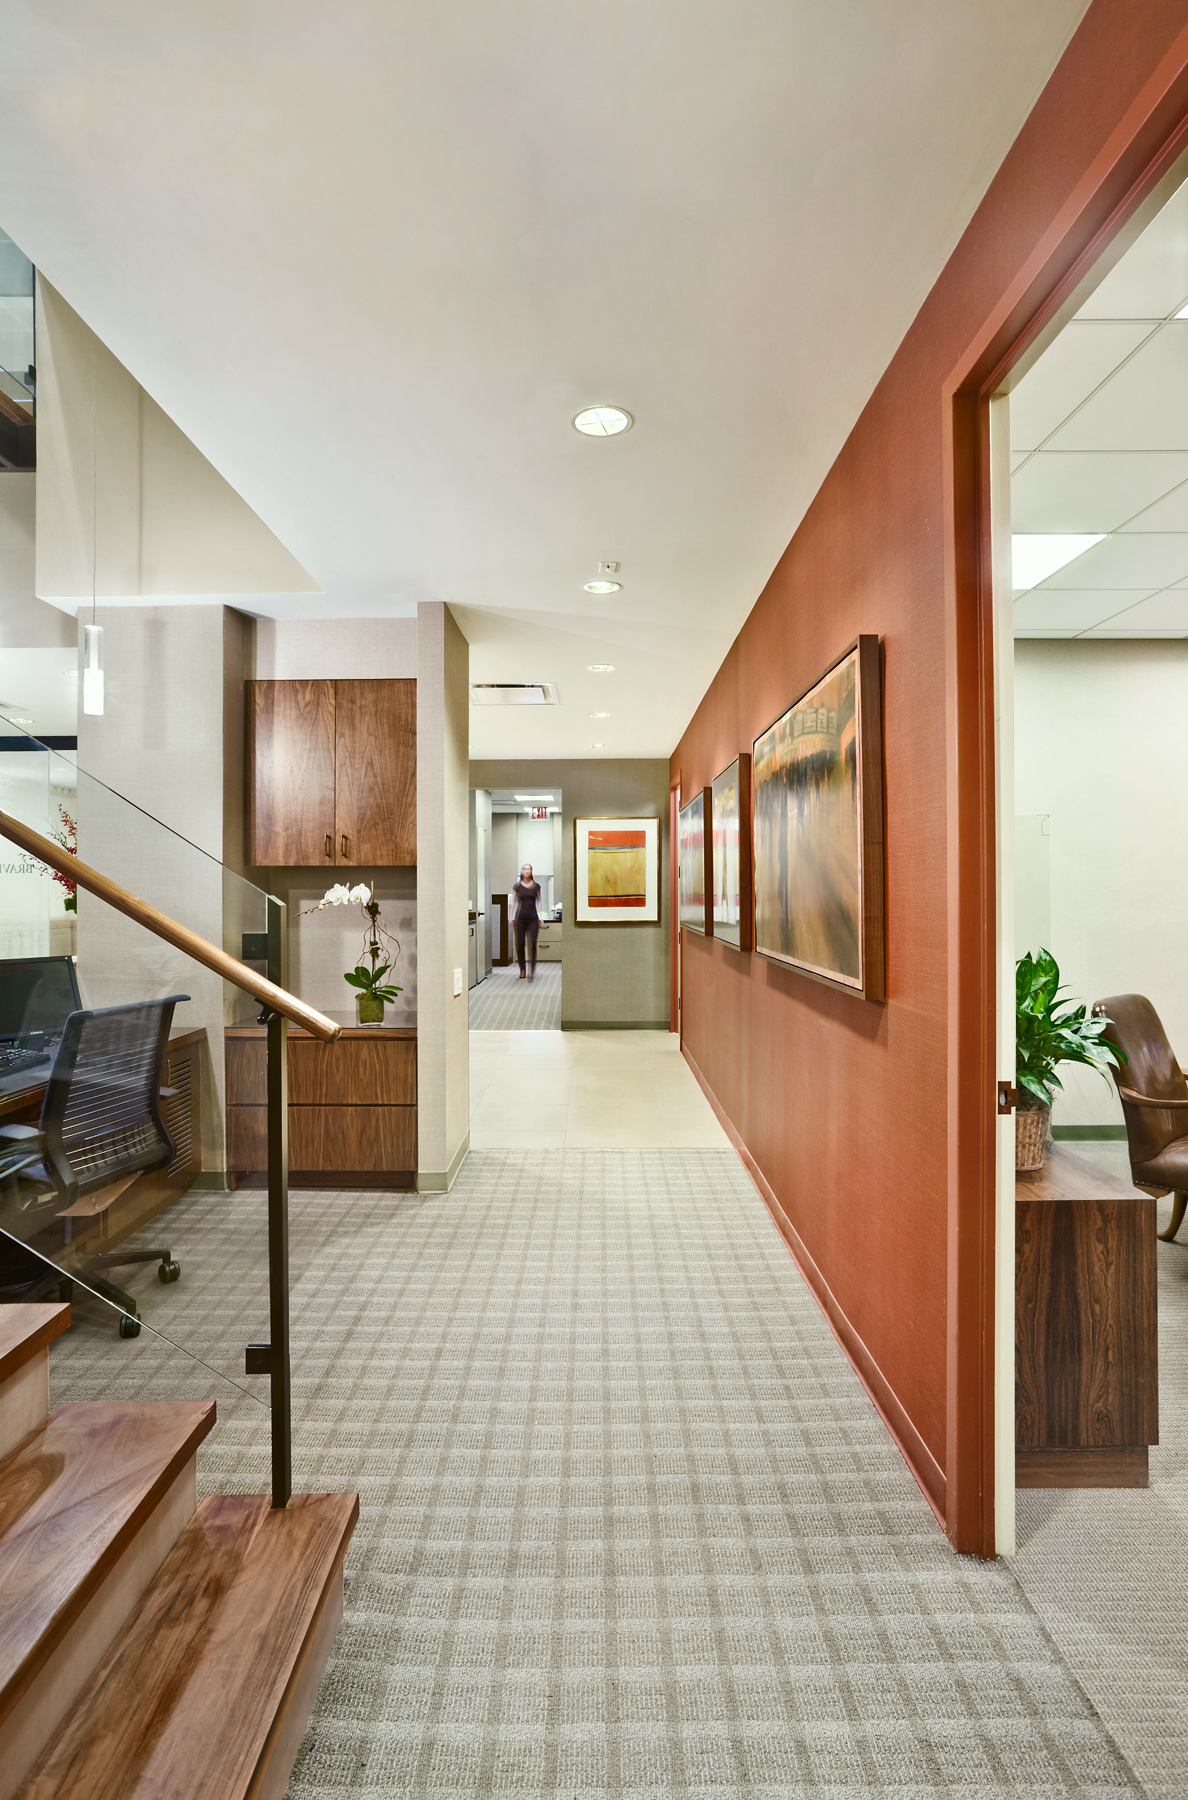 Tobin Parnes Design. Workplace Design. Office Design. Corridor Design